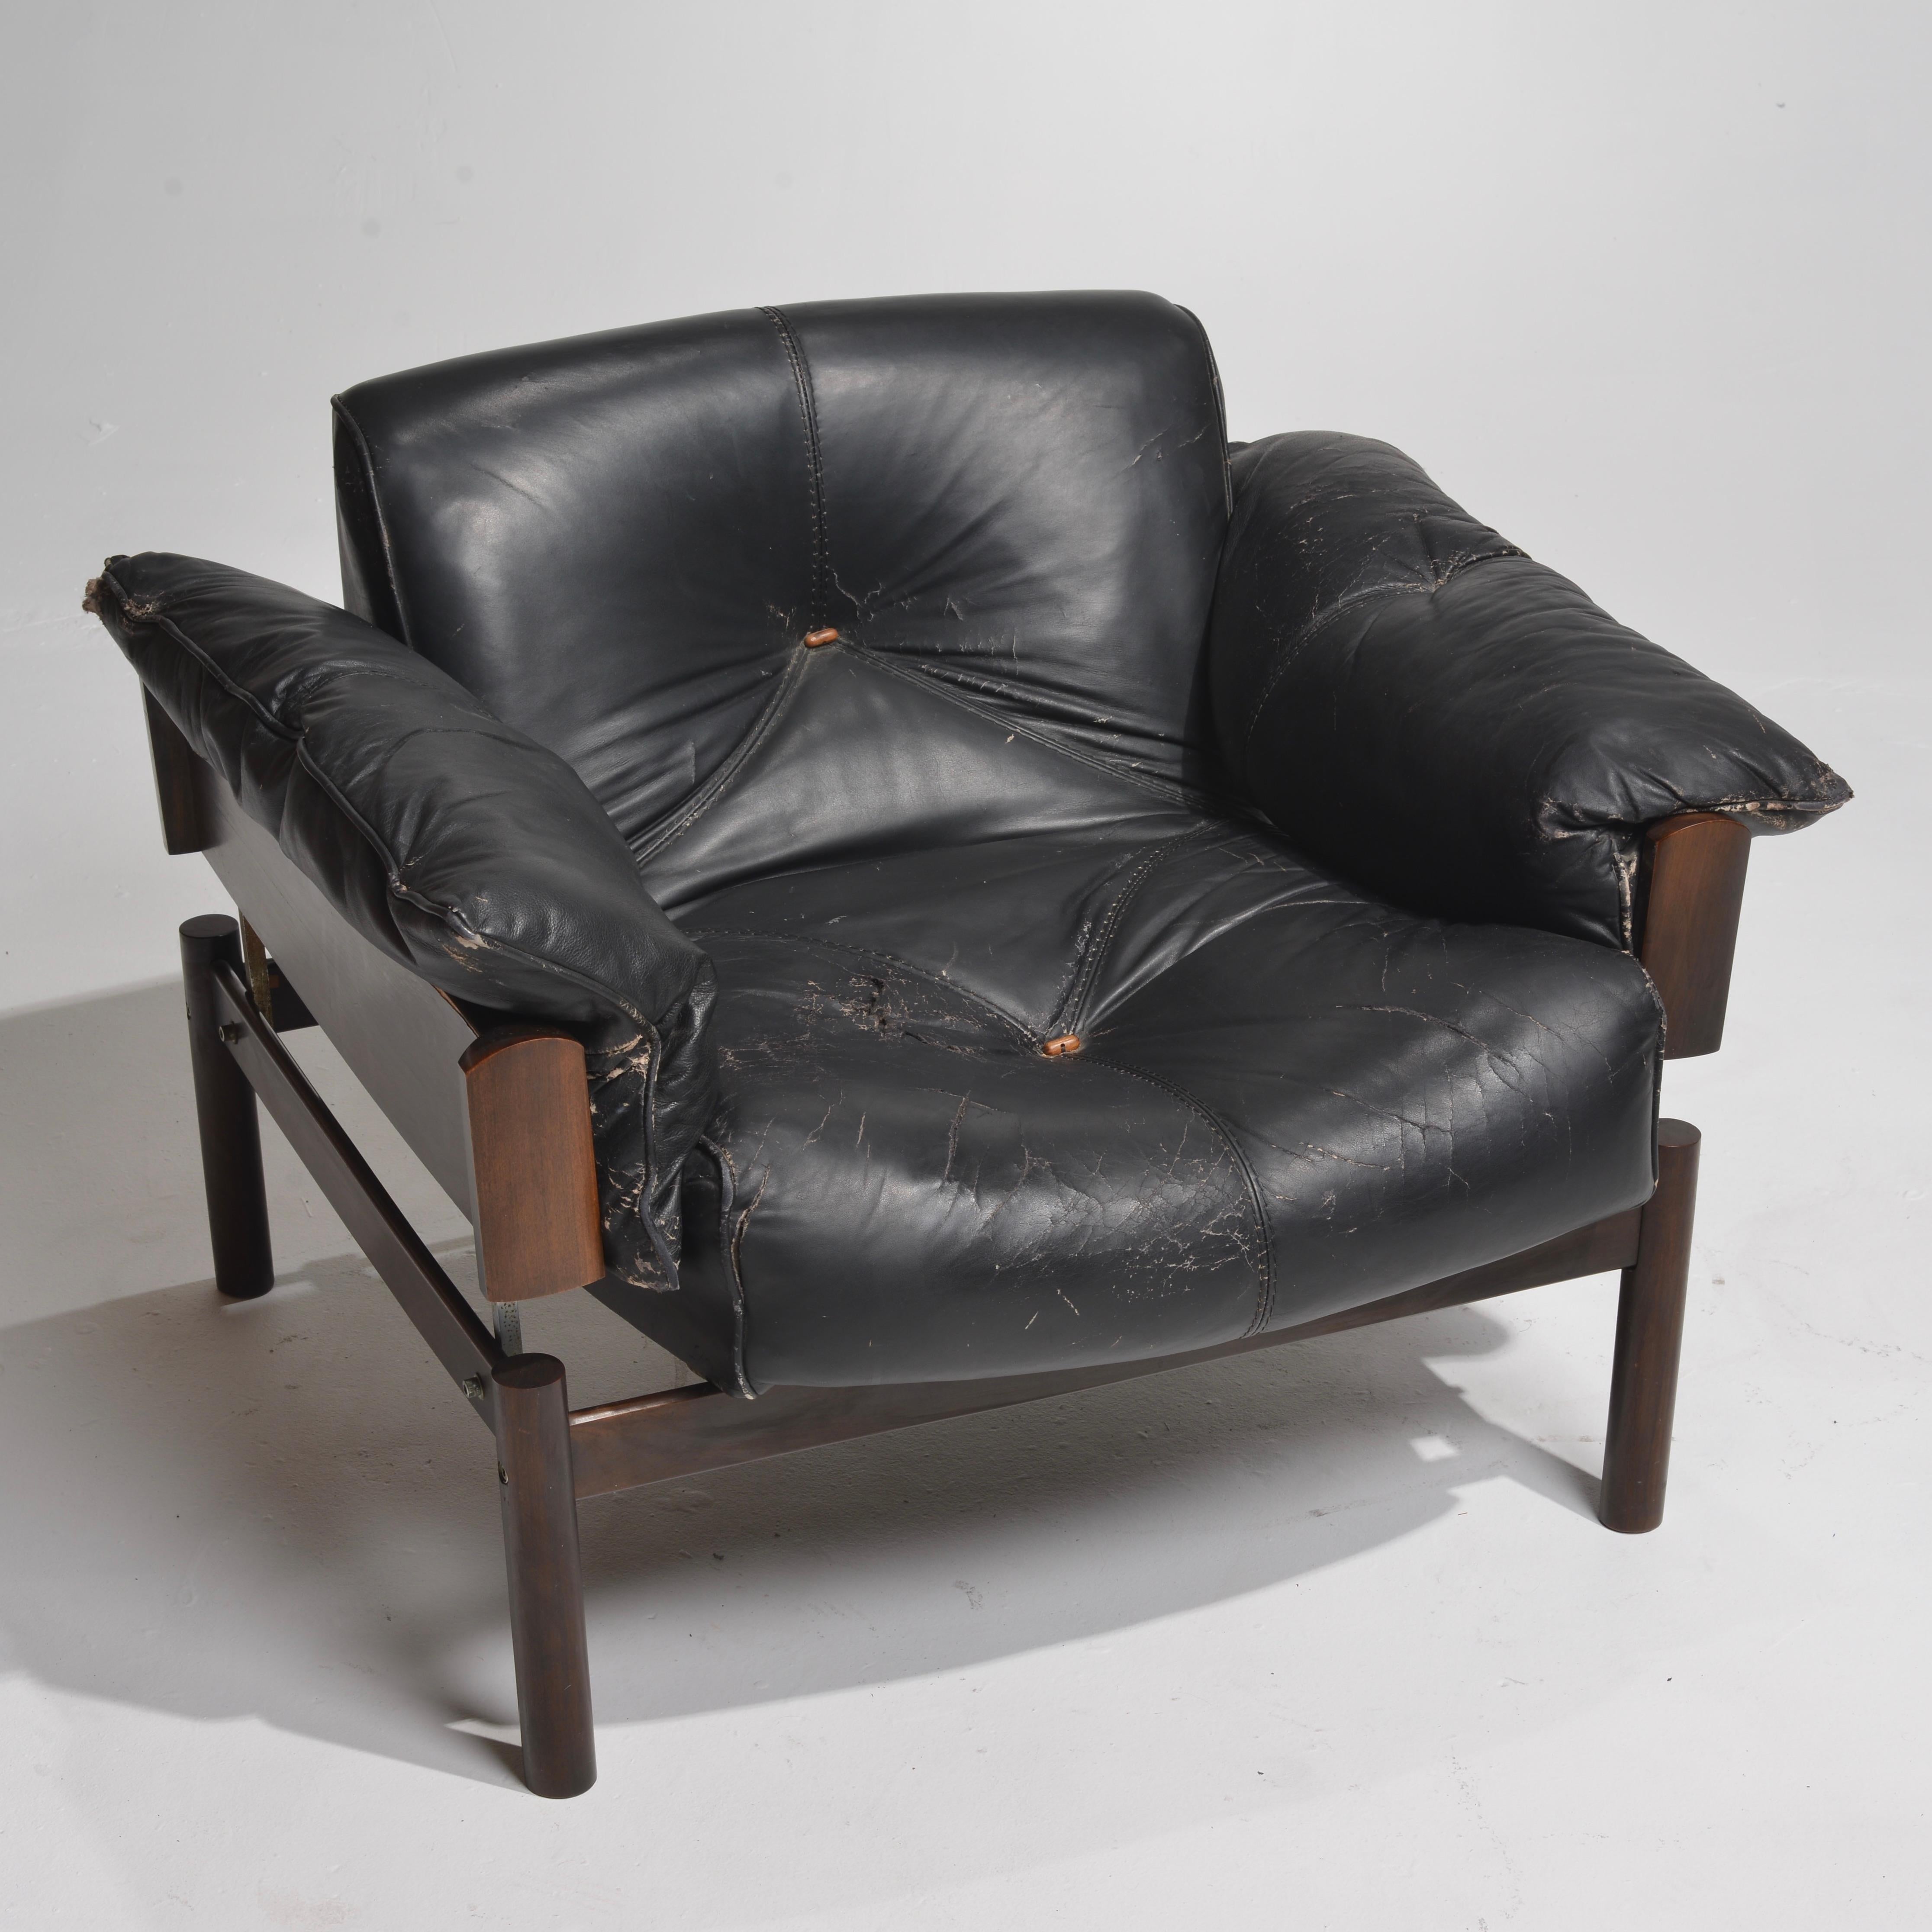 Percival Lafer Brazilian Modernist Rosewood Chair Model MP-013 8